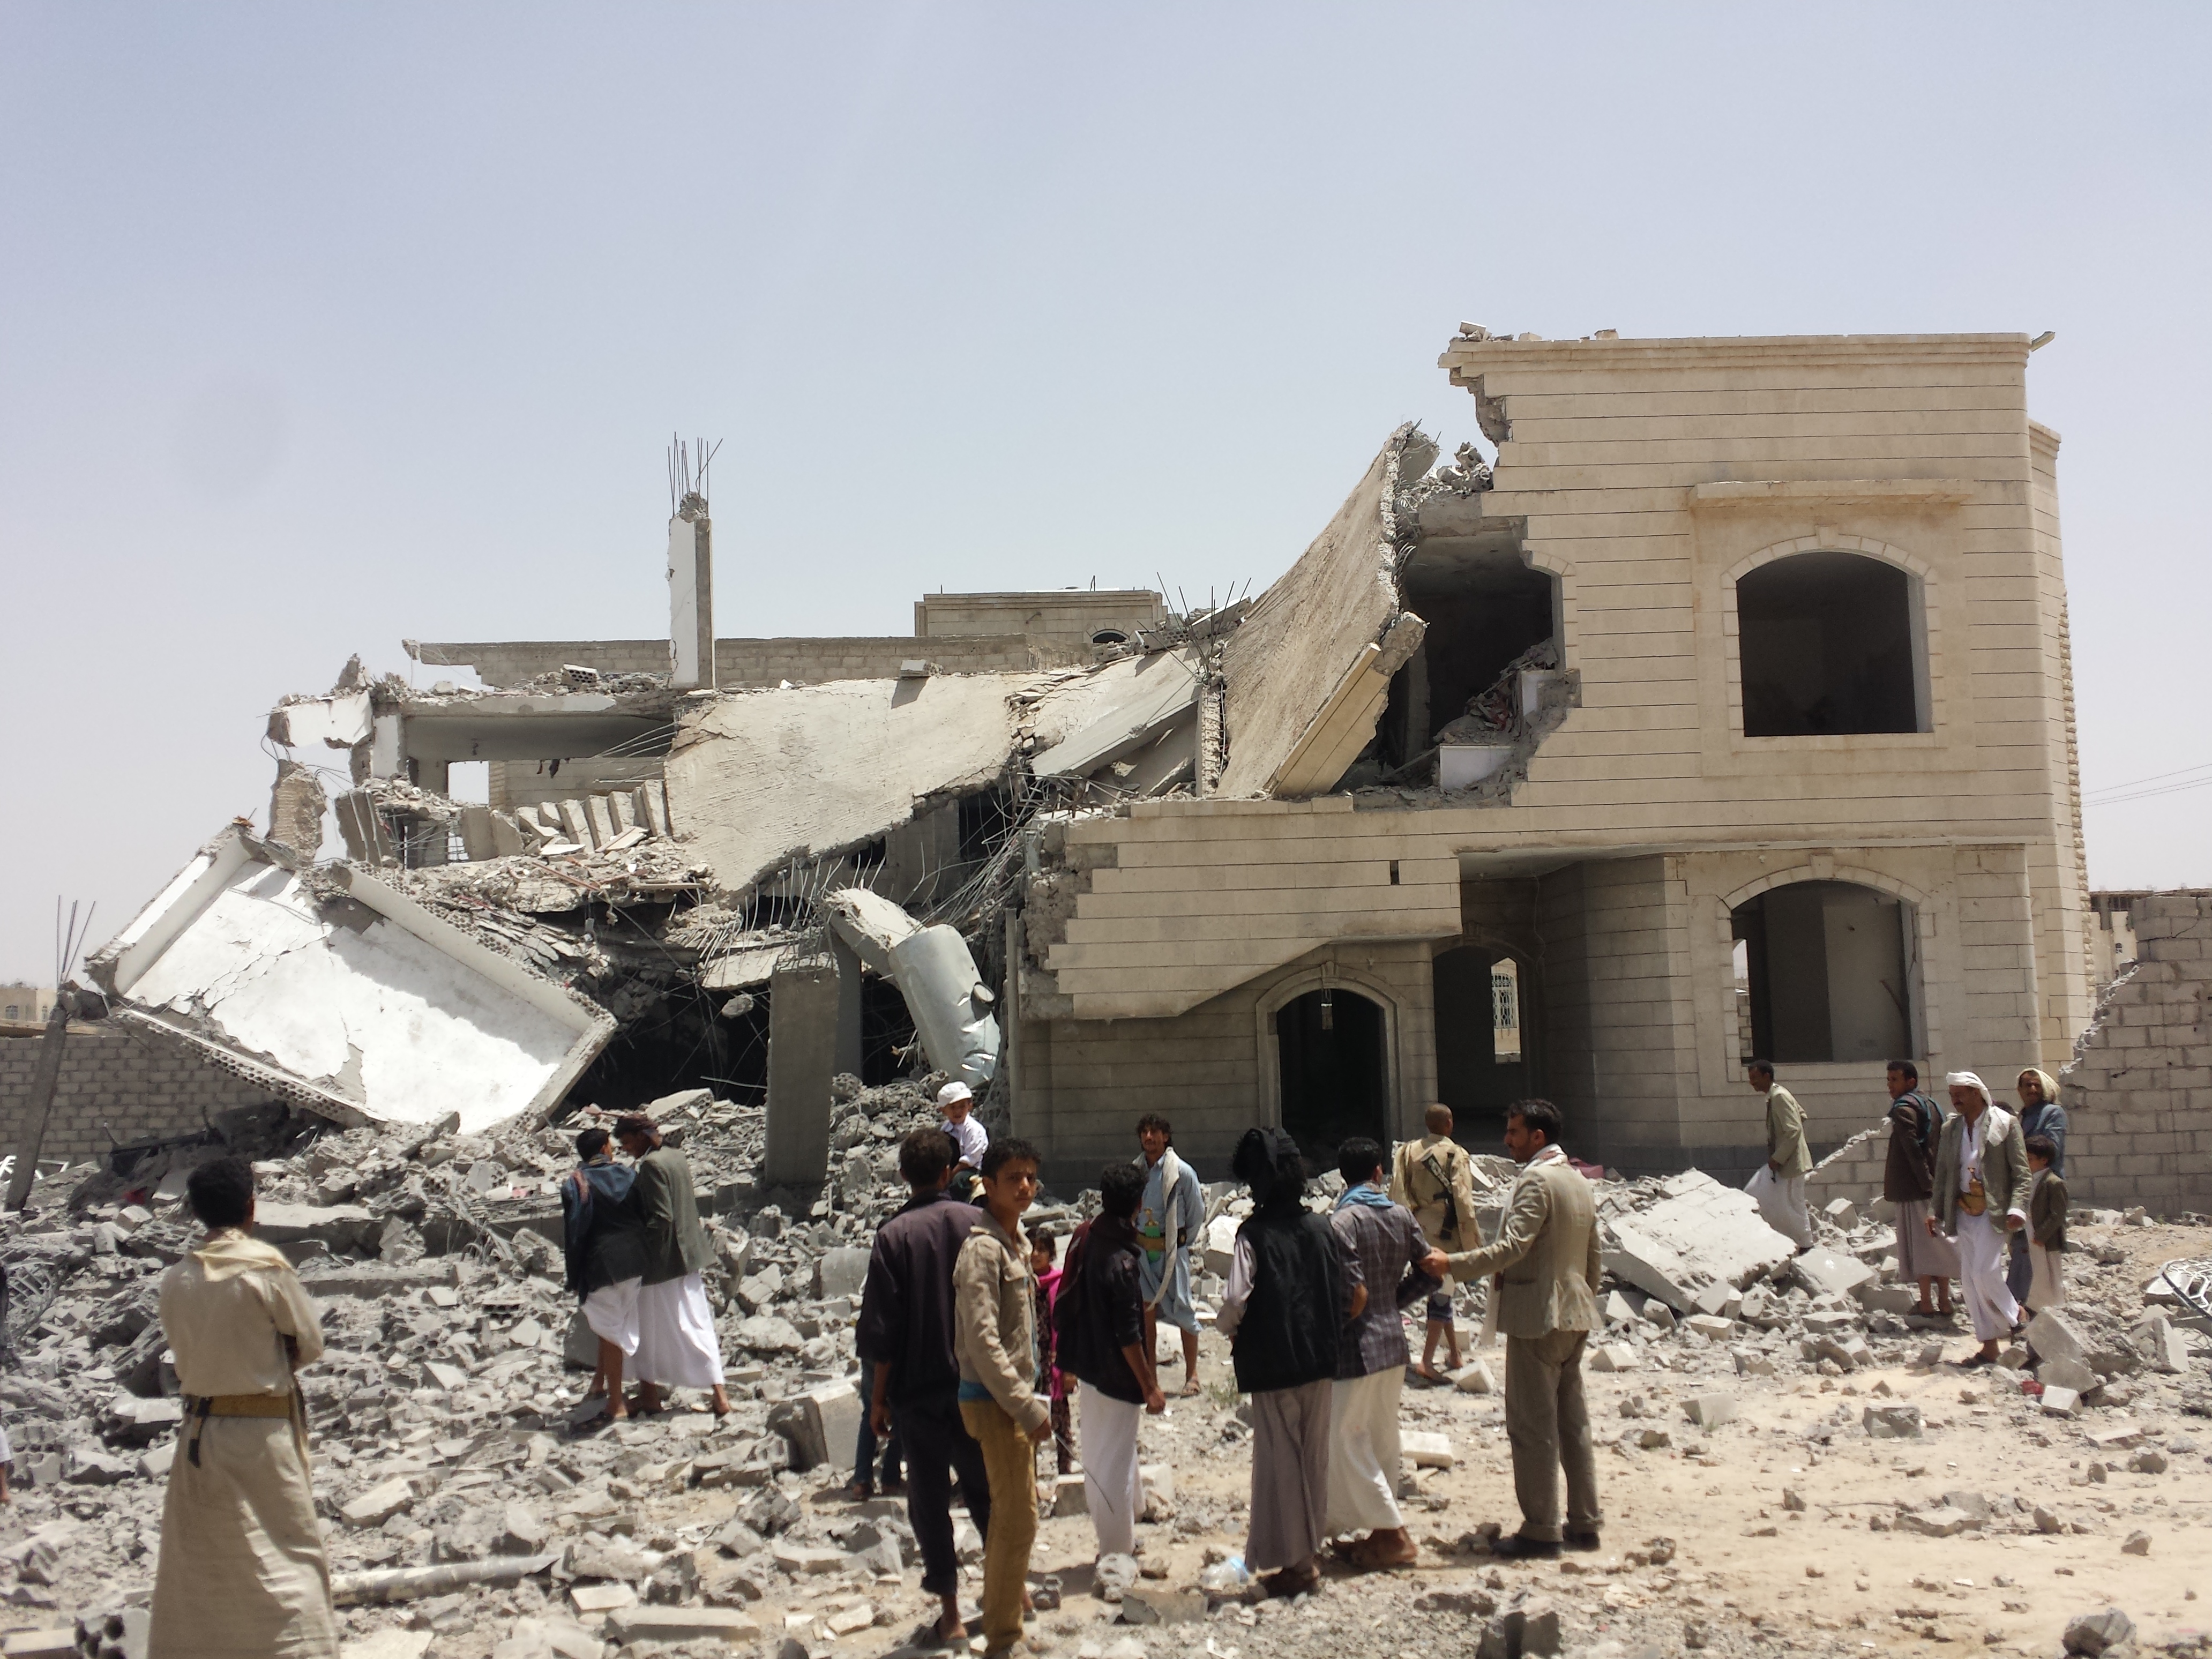 Destrpyed house in Yemen, 2015